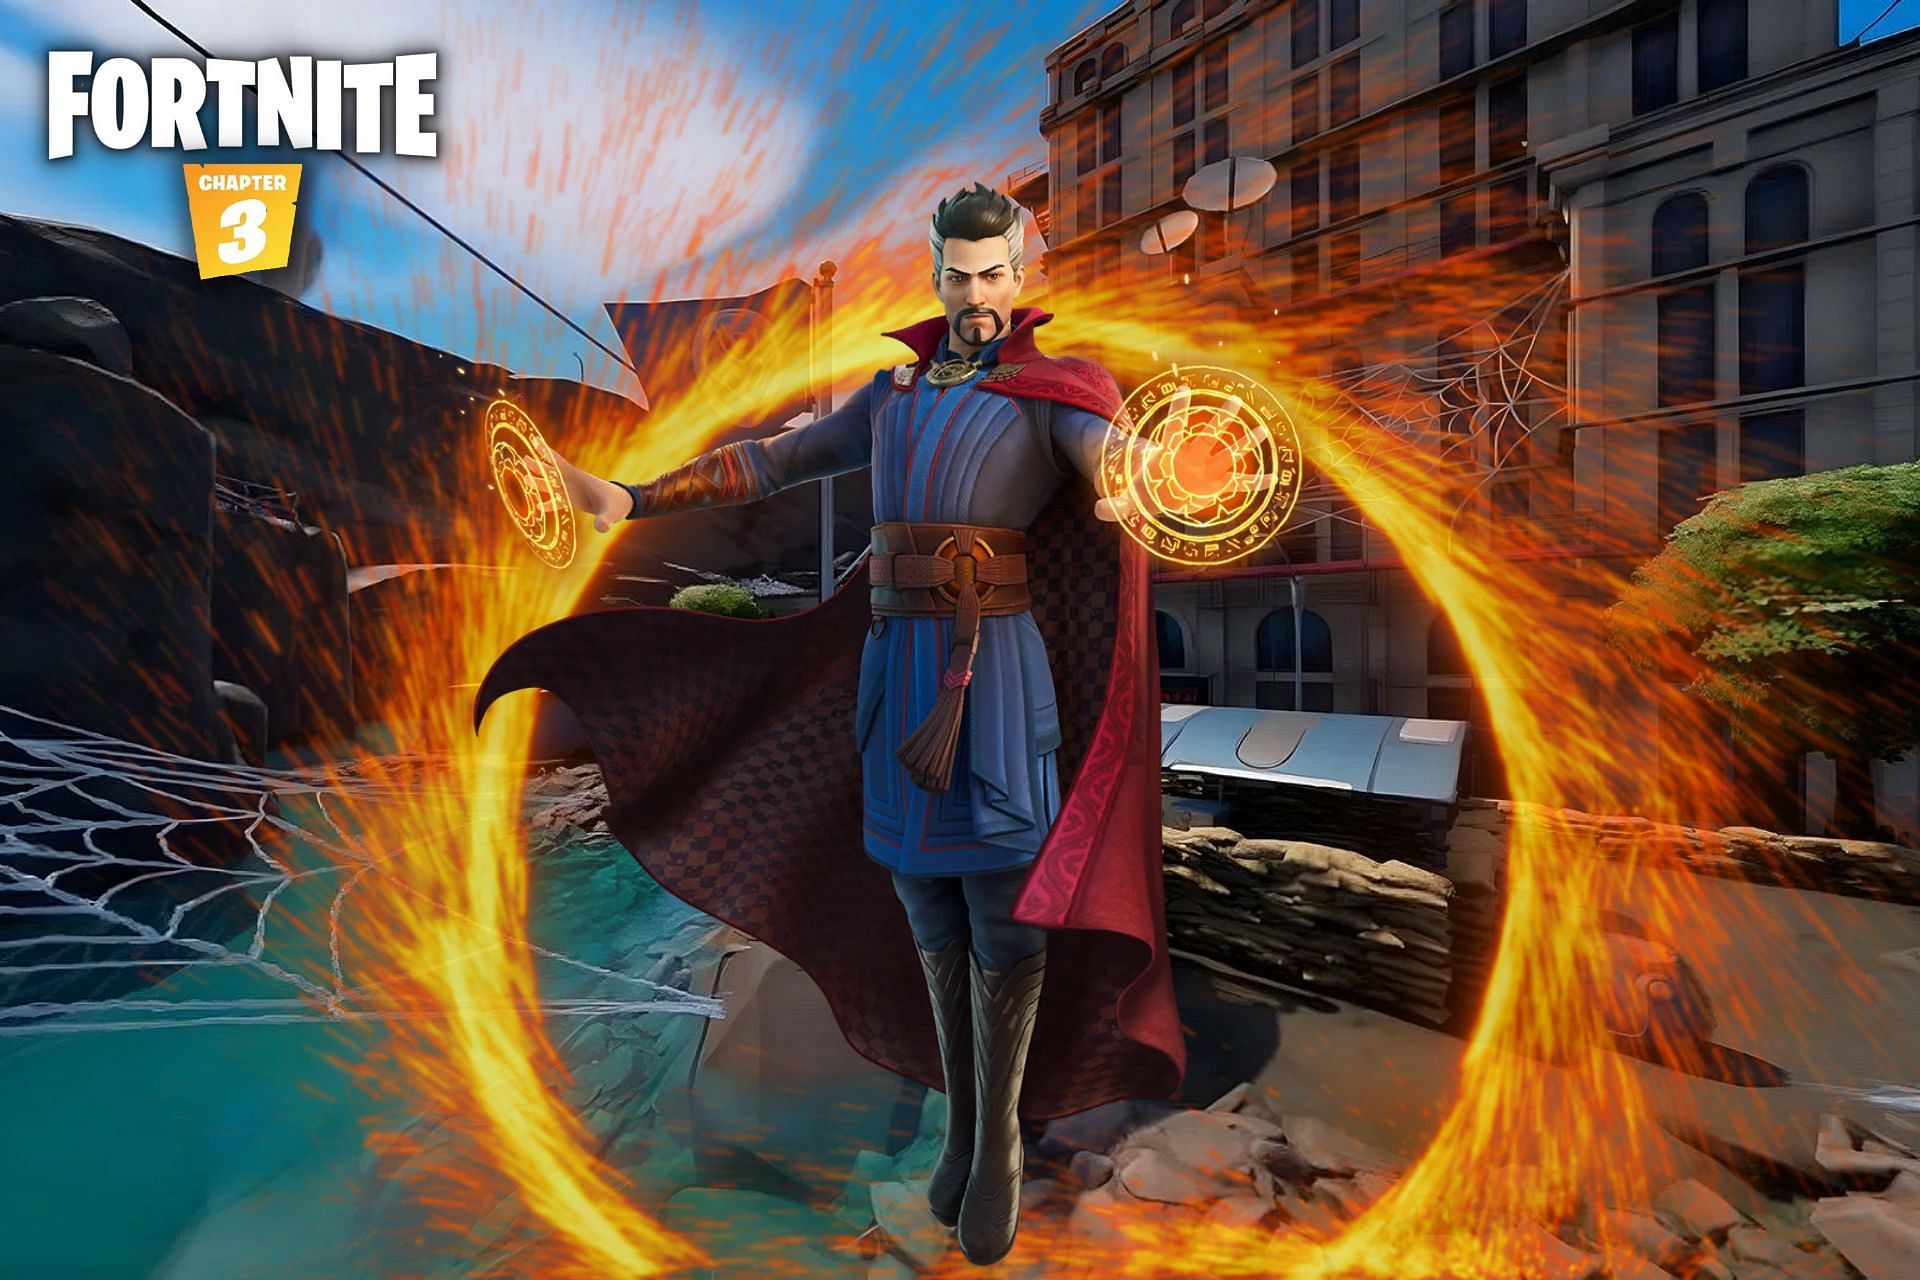 Fortnite's Chapter 3, season 2 kicks off with Doctor Strange